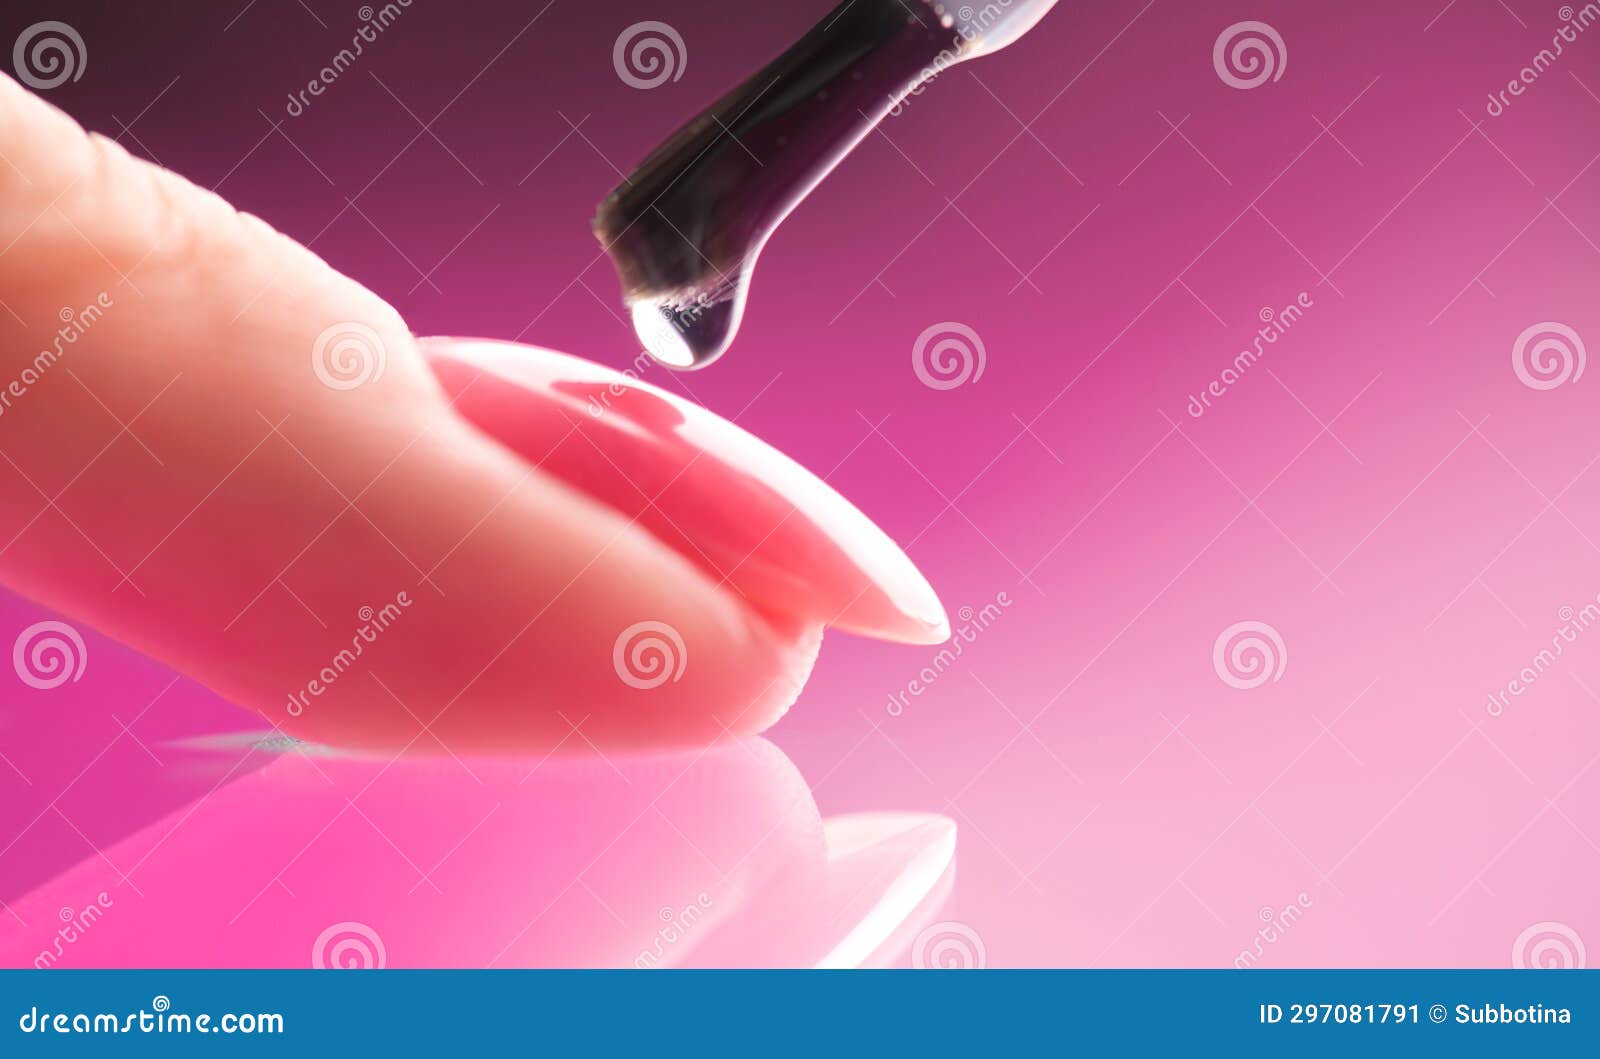 applying nail polish, pink shellac uv gel, varnish, manicure process concept in beauty salon